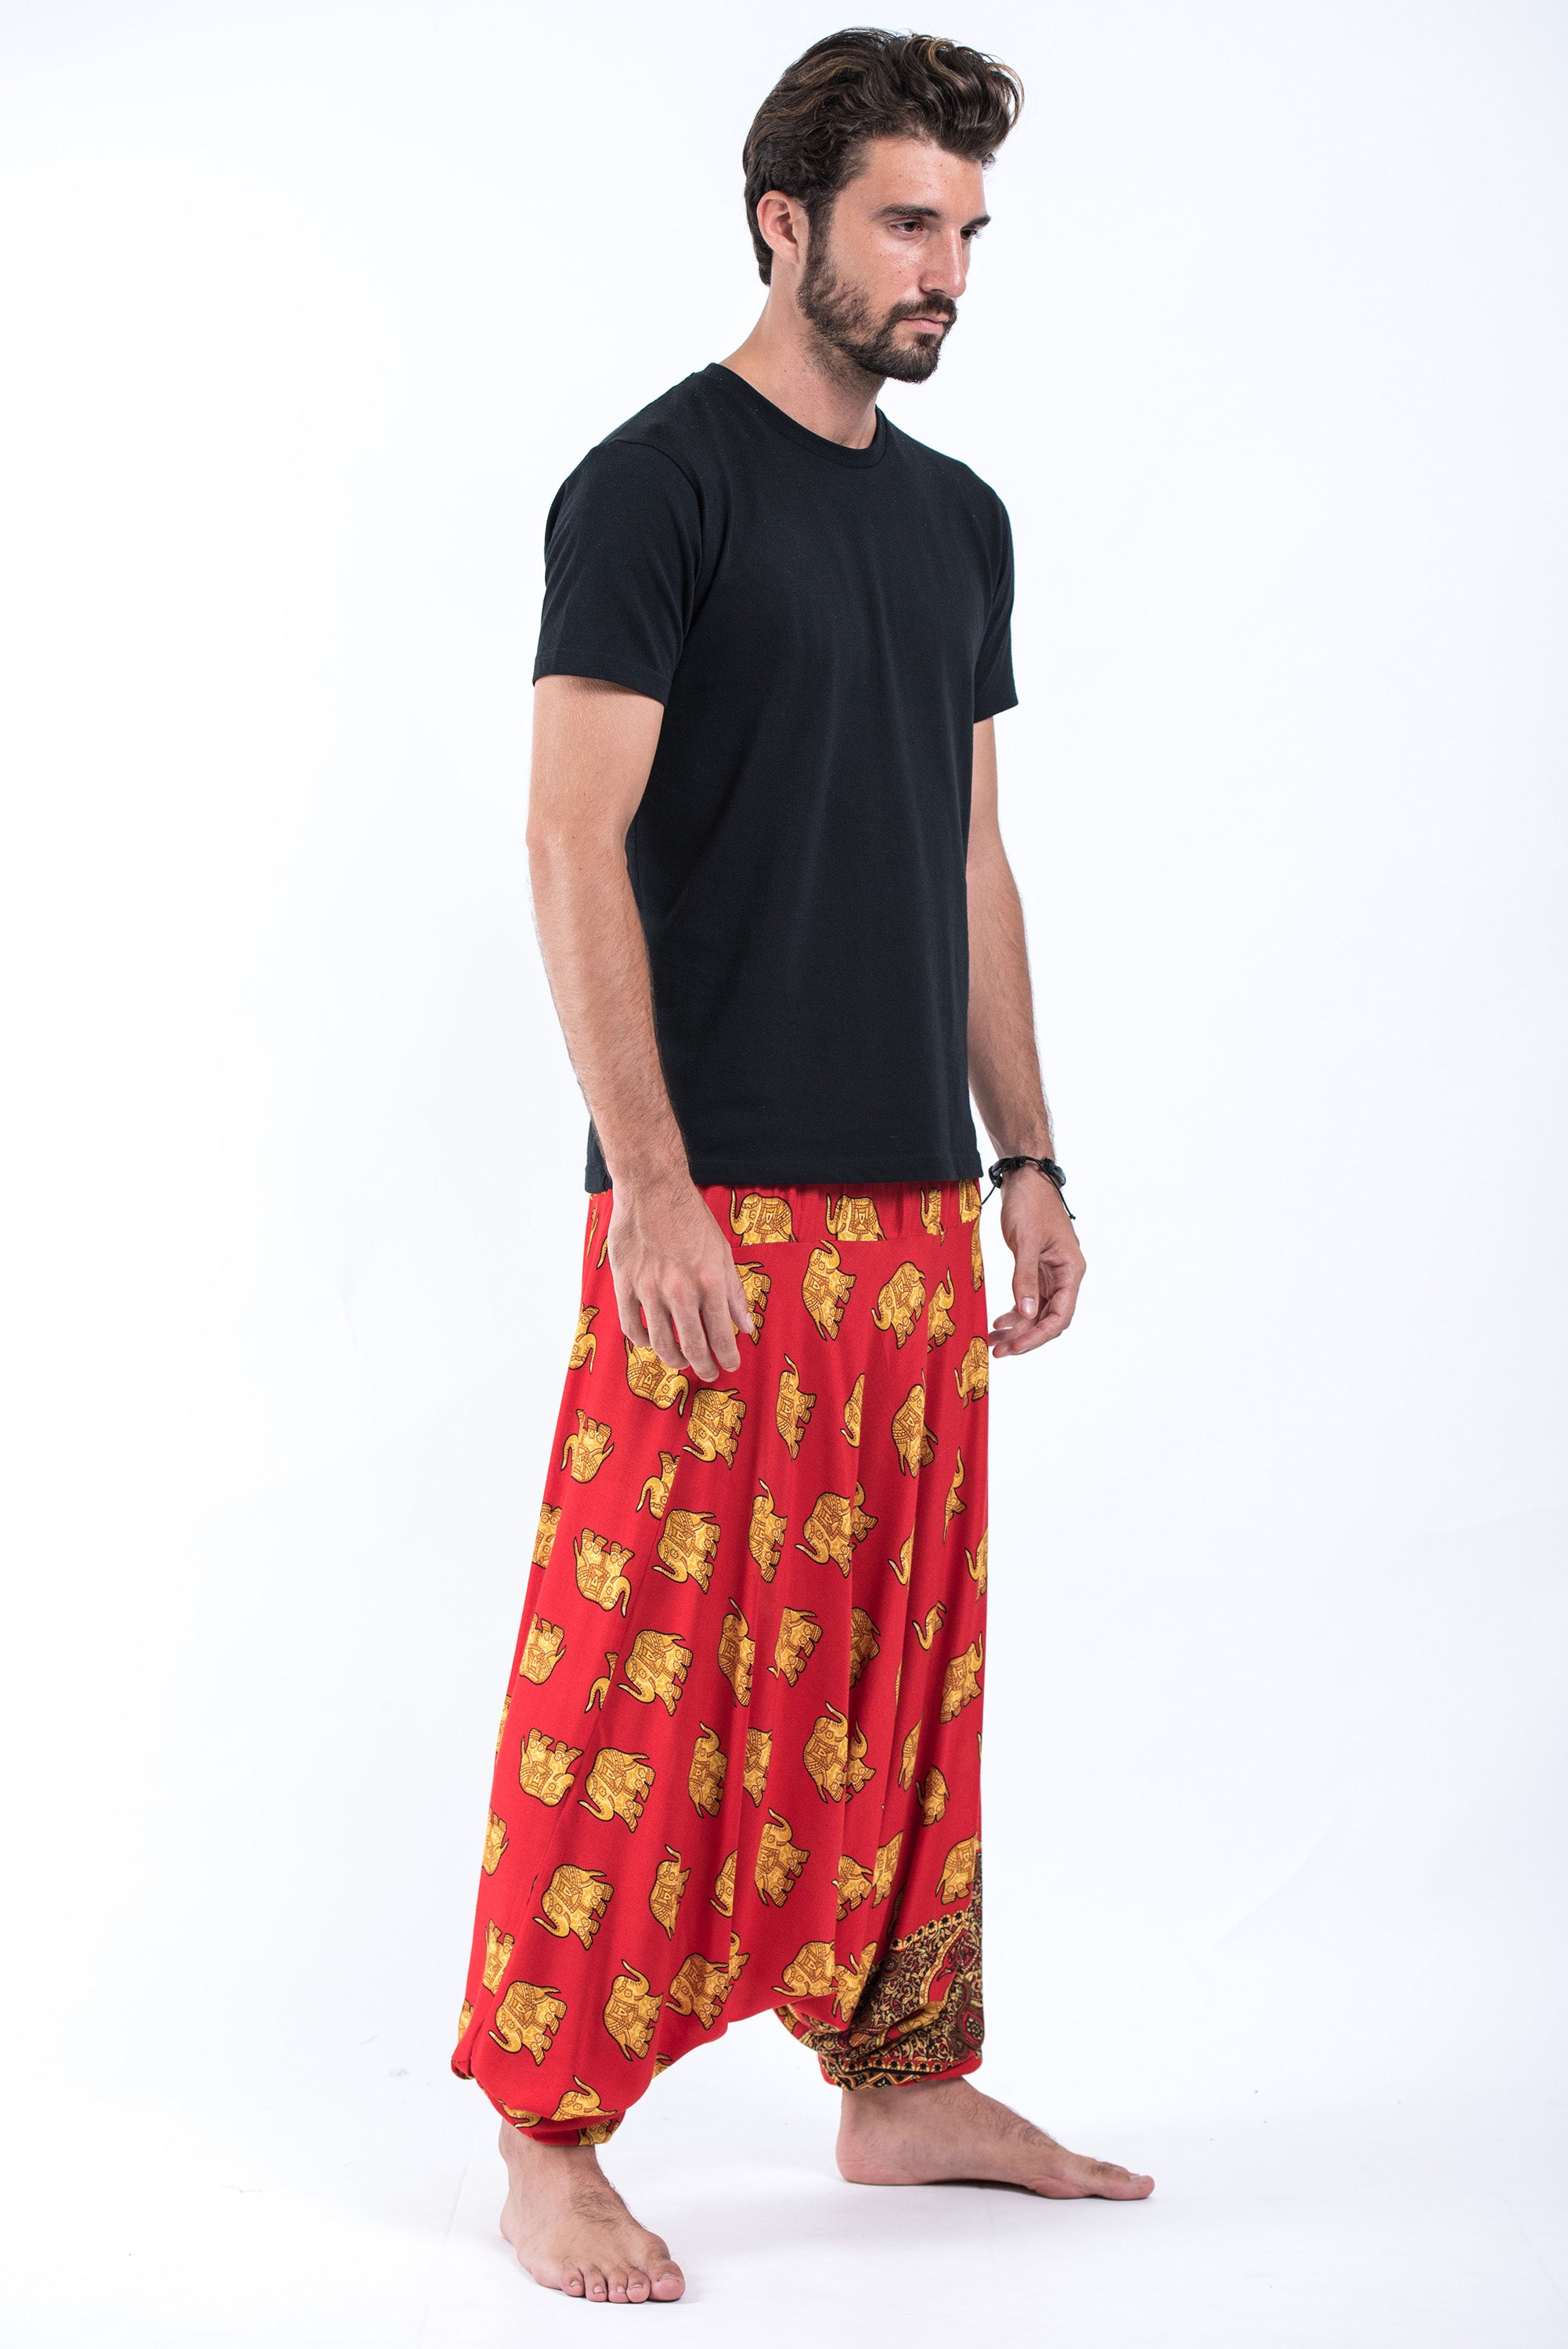 Golden Elephant Drop Crotch Men's Elephant Pants in Red – Harem Pants